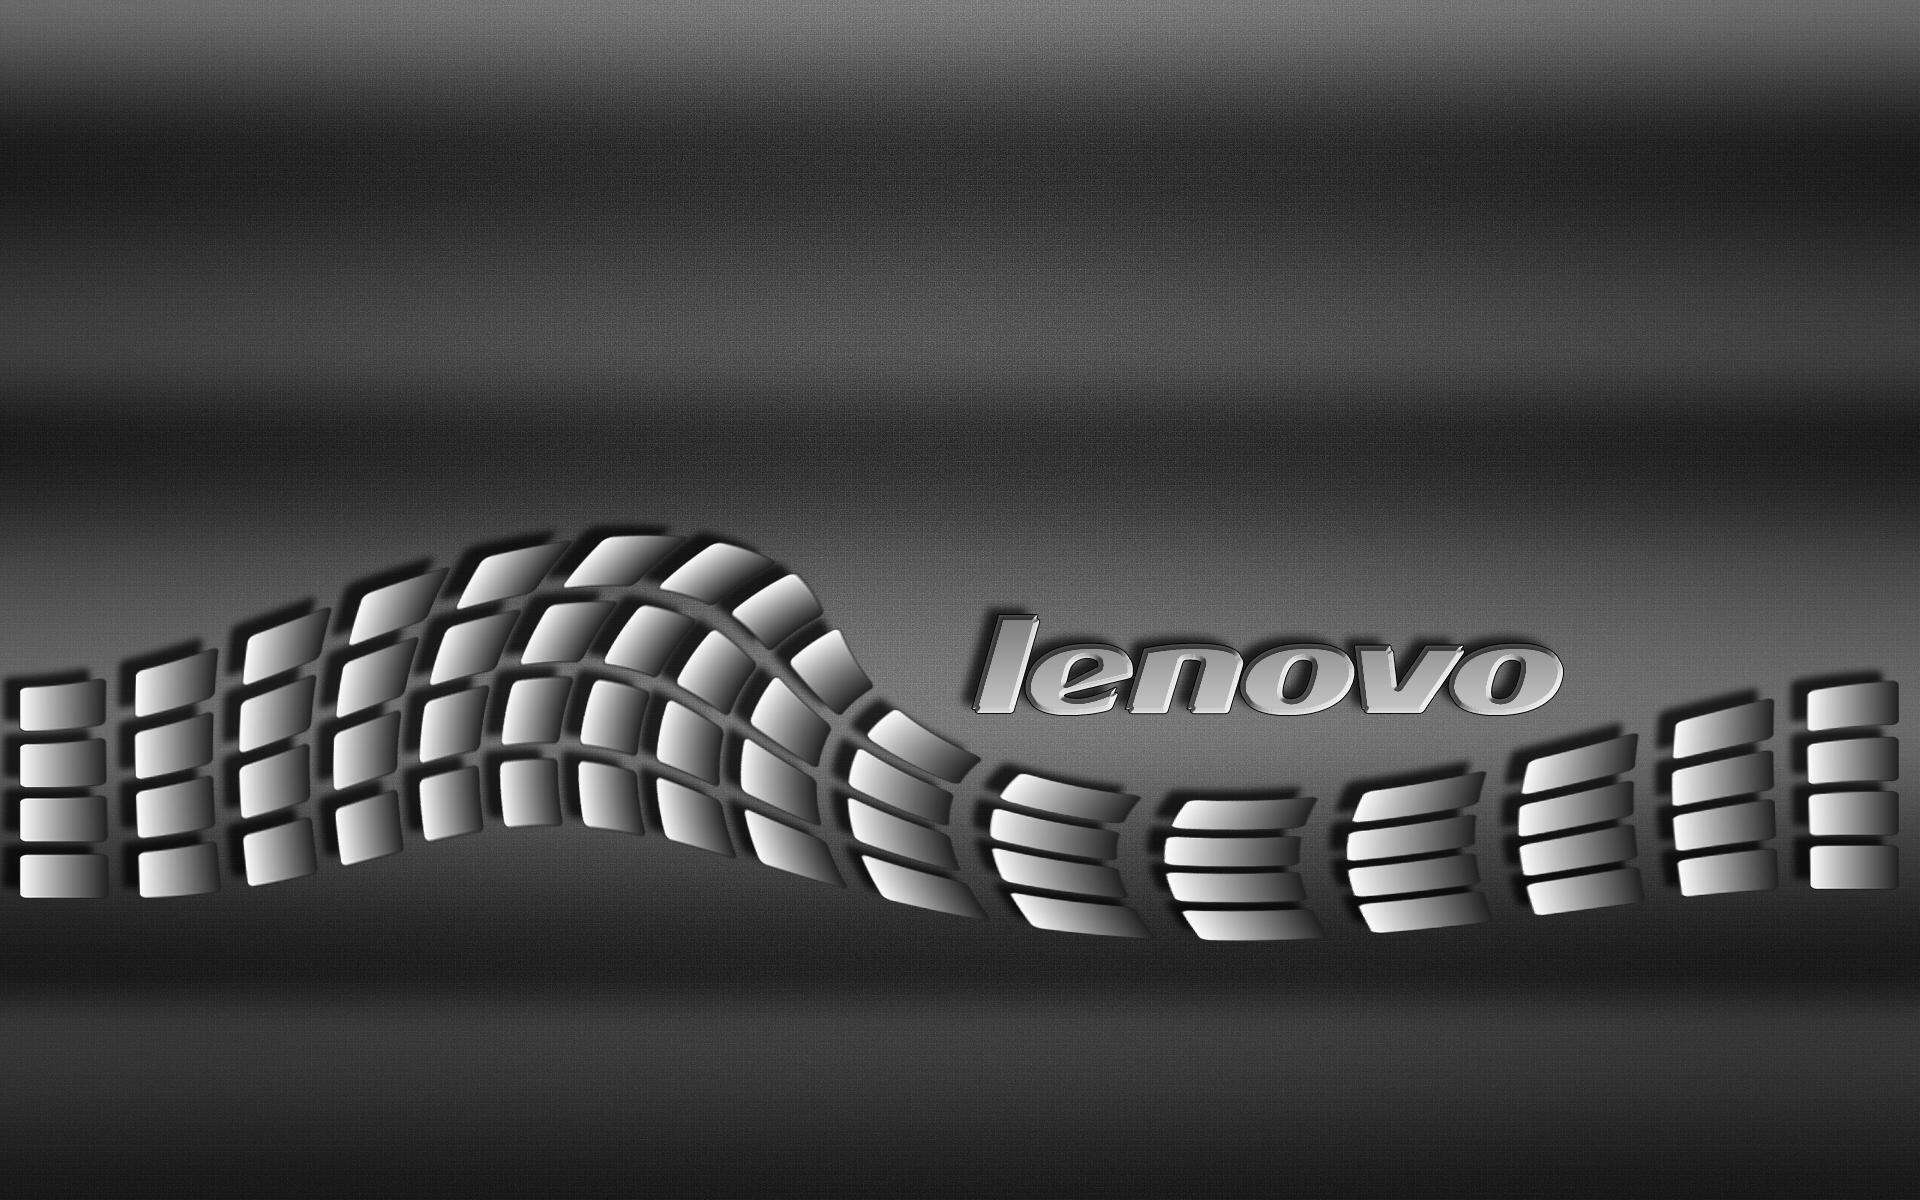 Lenovo Desktop Wallpapers - Top Free